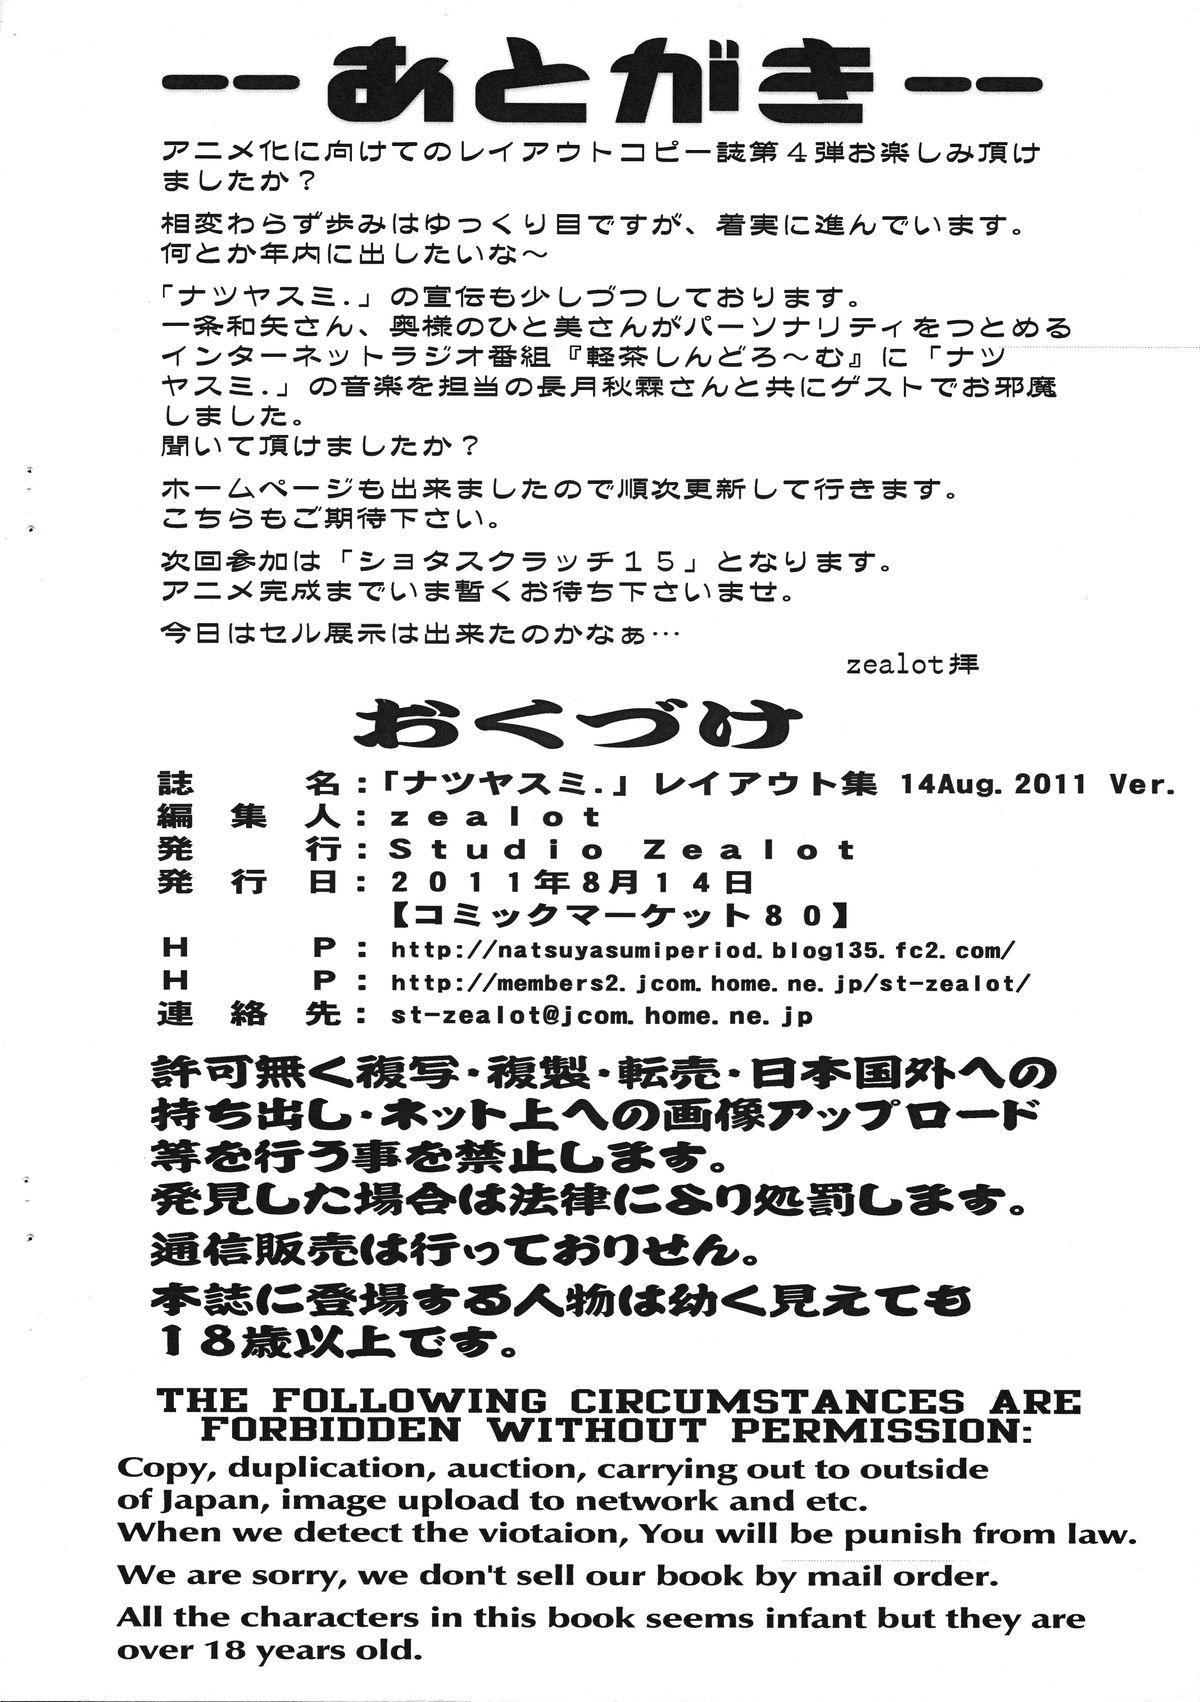 Mojada Natsuyasumi Period Layout Shuu 14 Aug. 2011 Ver. Watersports - Page 11